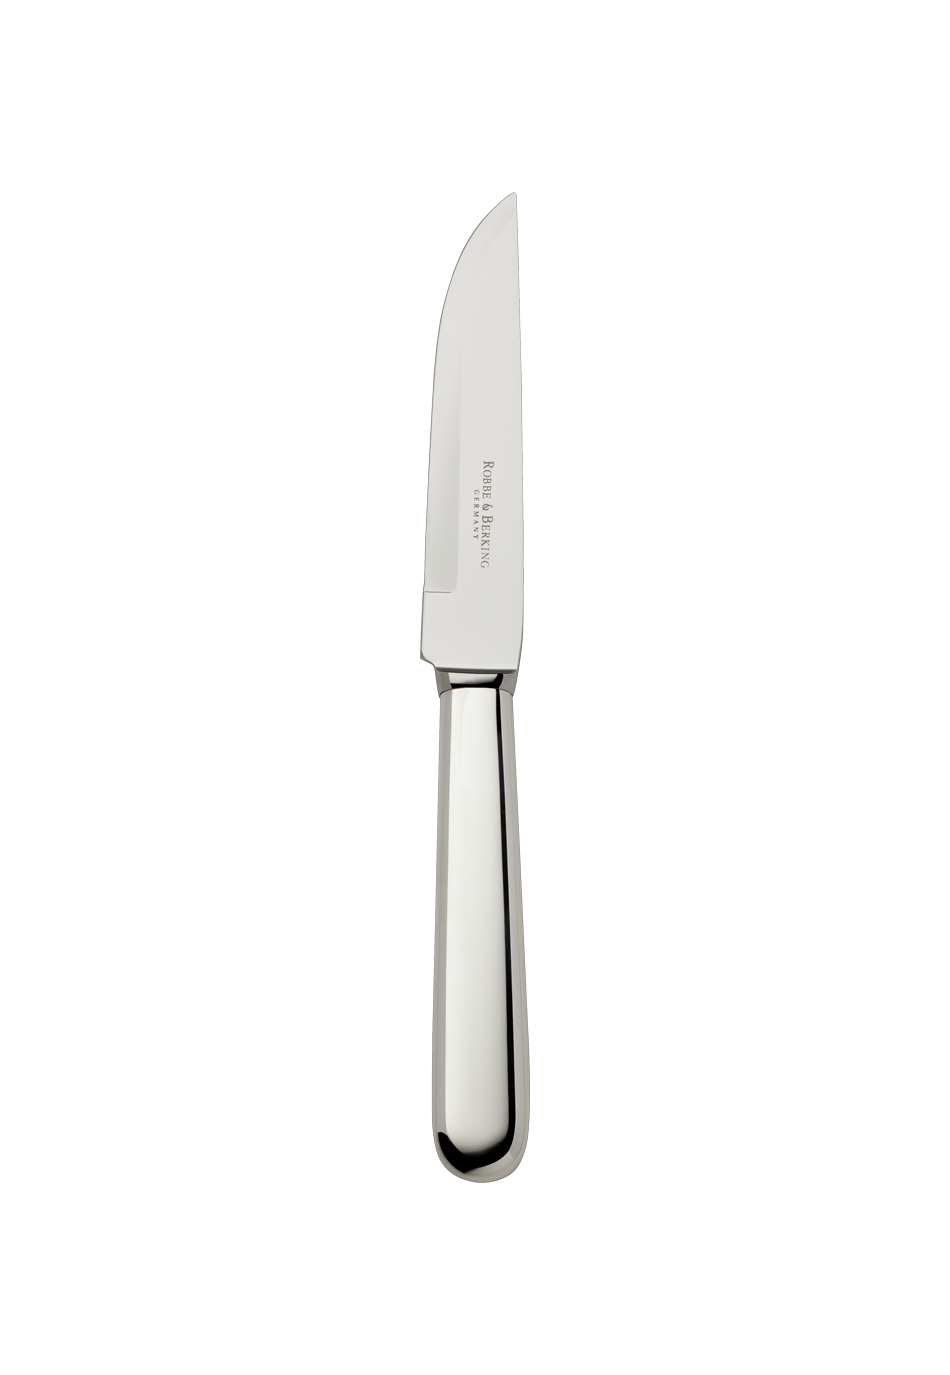 Dante Steak Knife (150g massive silverplated)